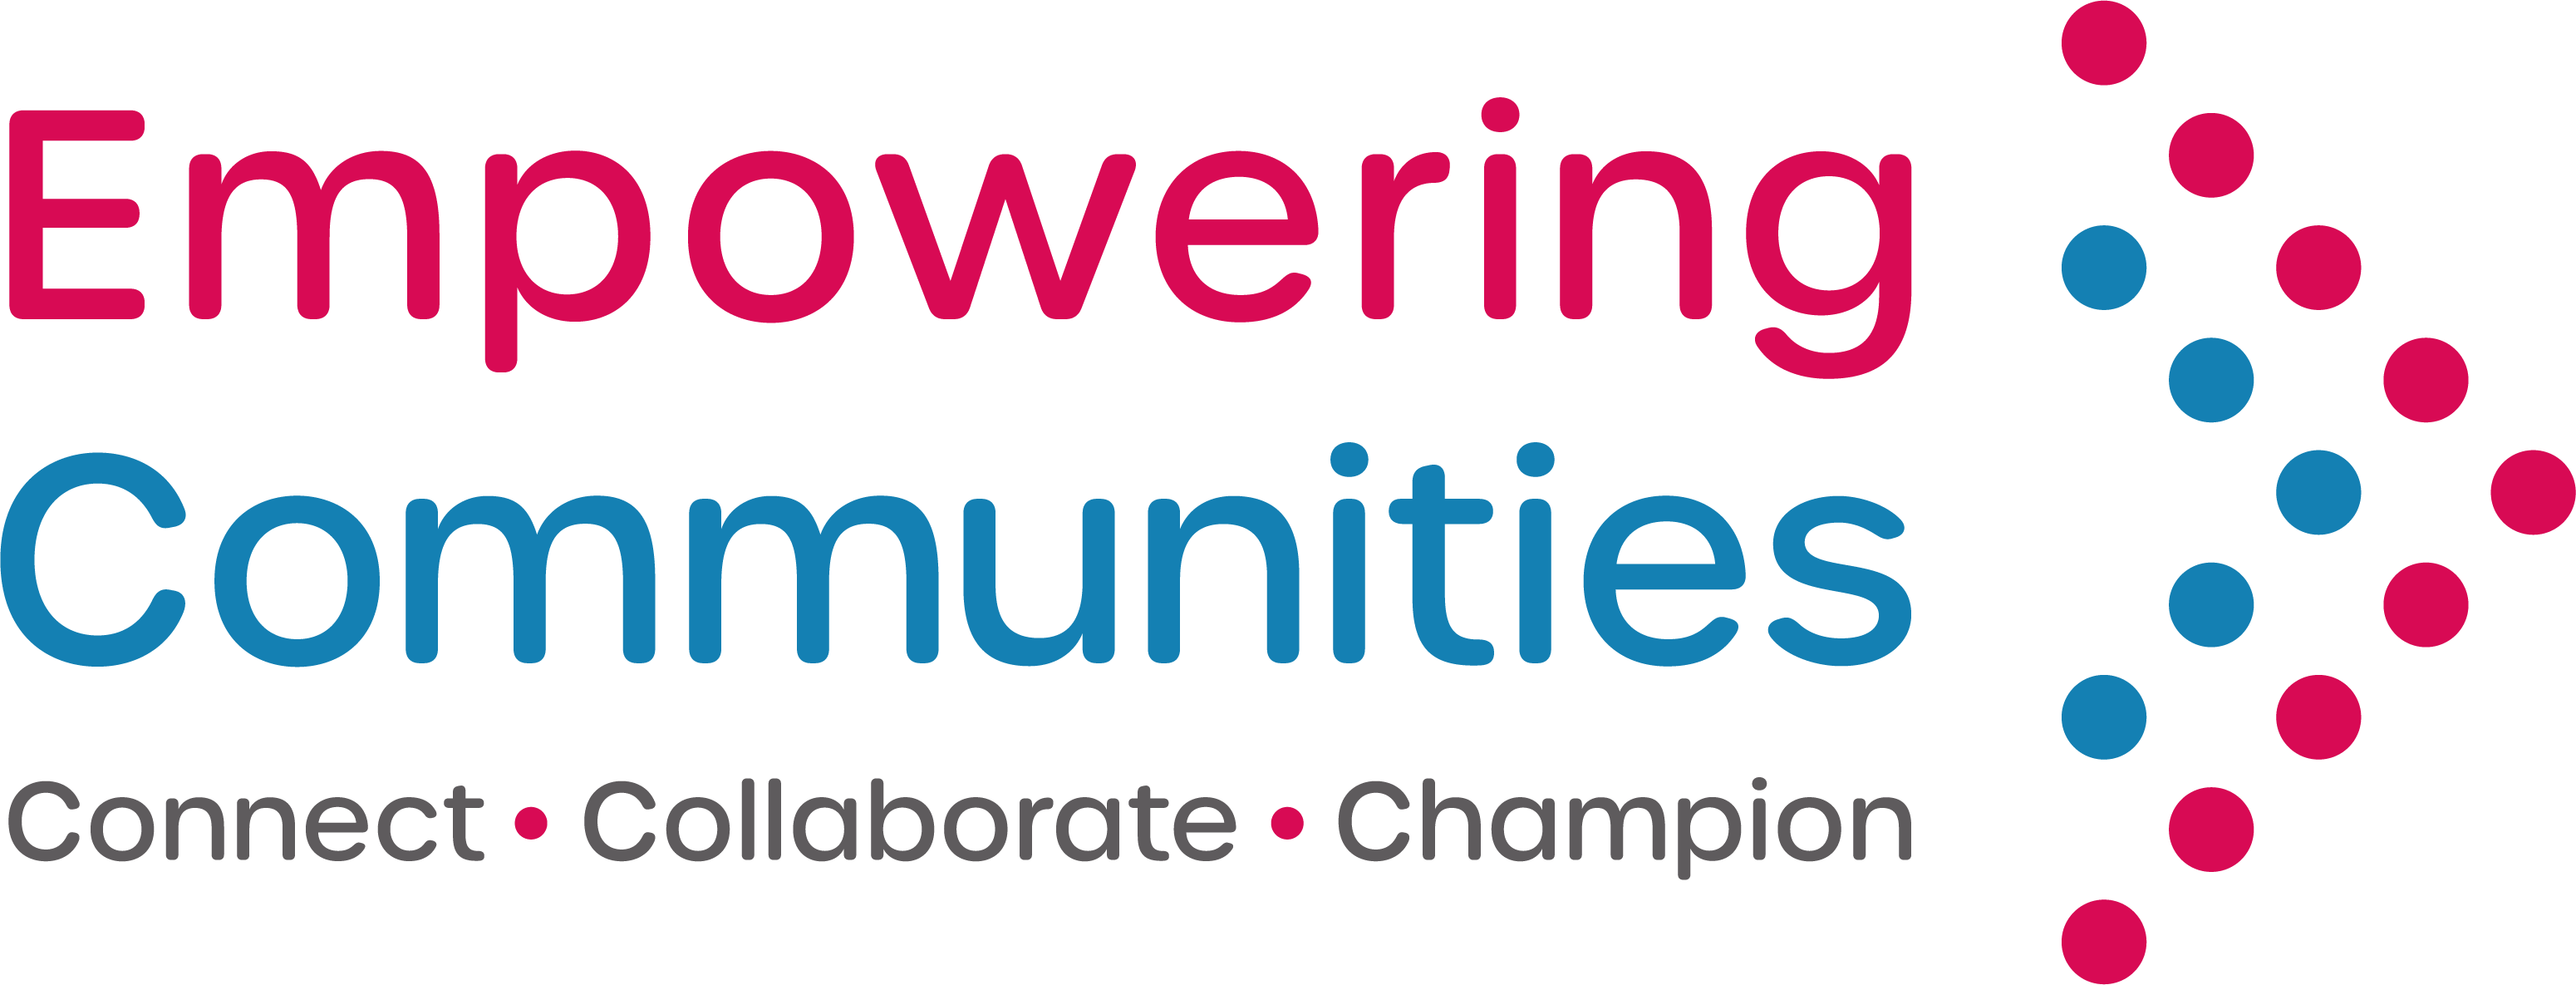 Empowering Communities logo